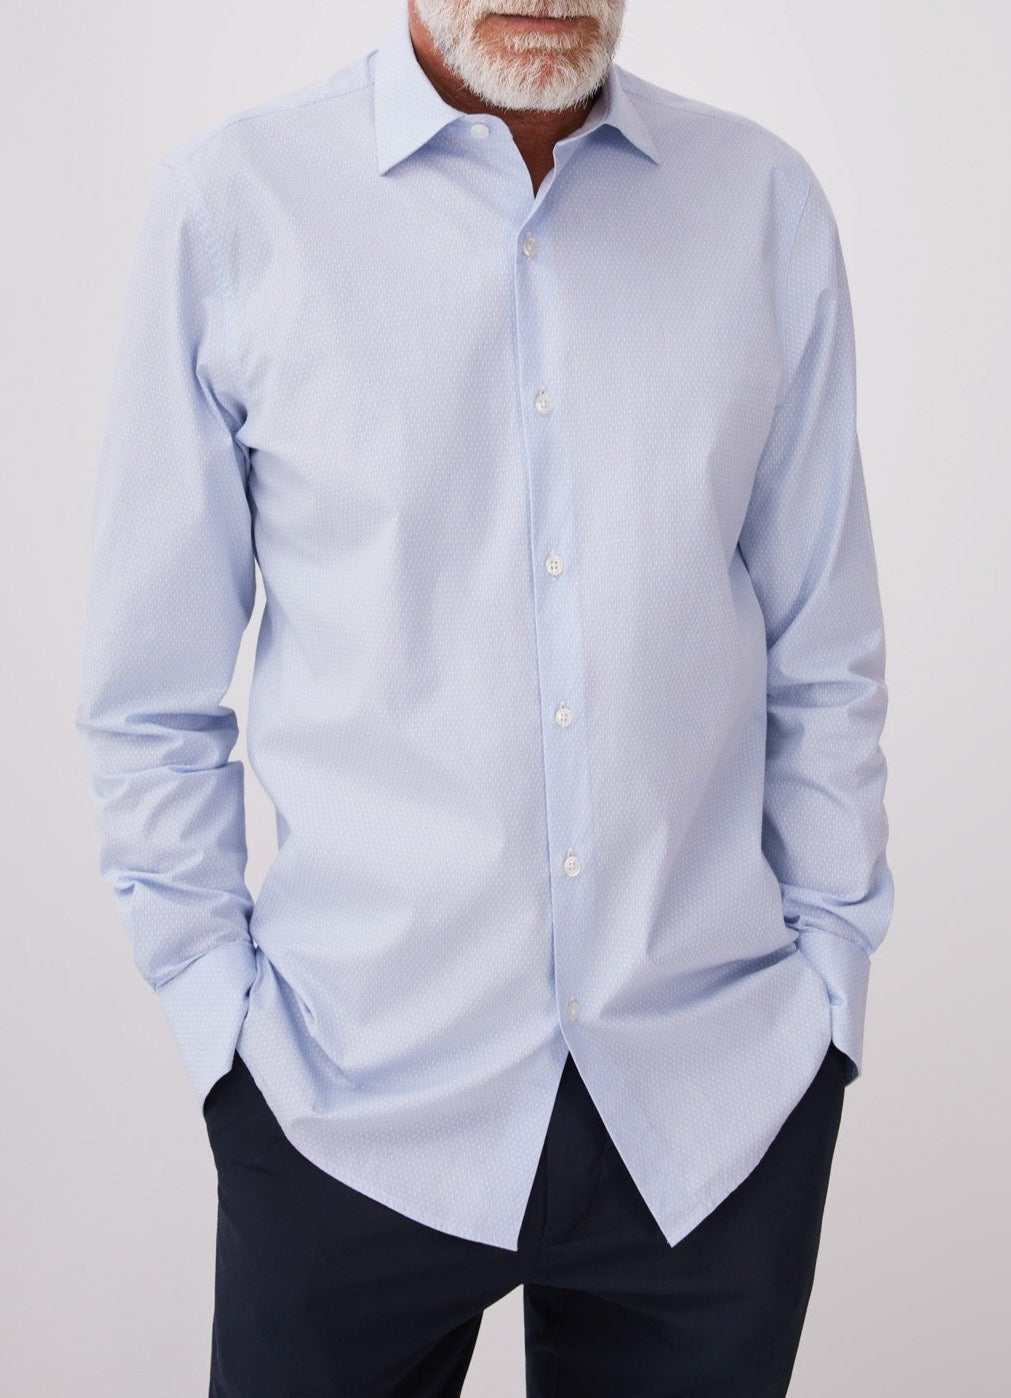 Men Long-Sleeve Shirt | Sky Blue/White Slim Fit Tailored Cotton Shirt by Spanish designer Adolfo Dominguez